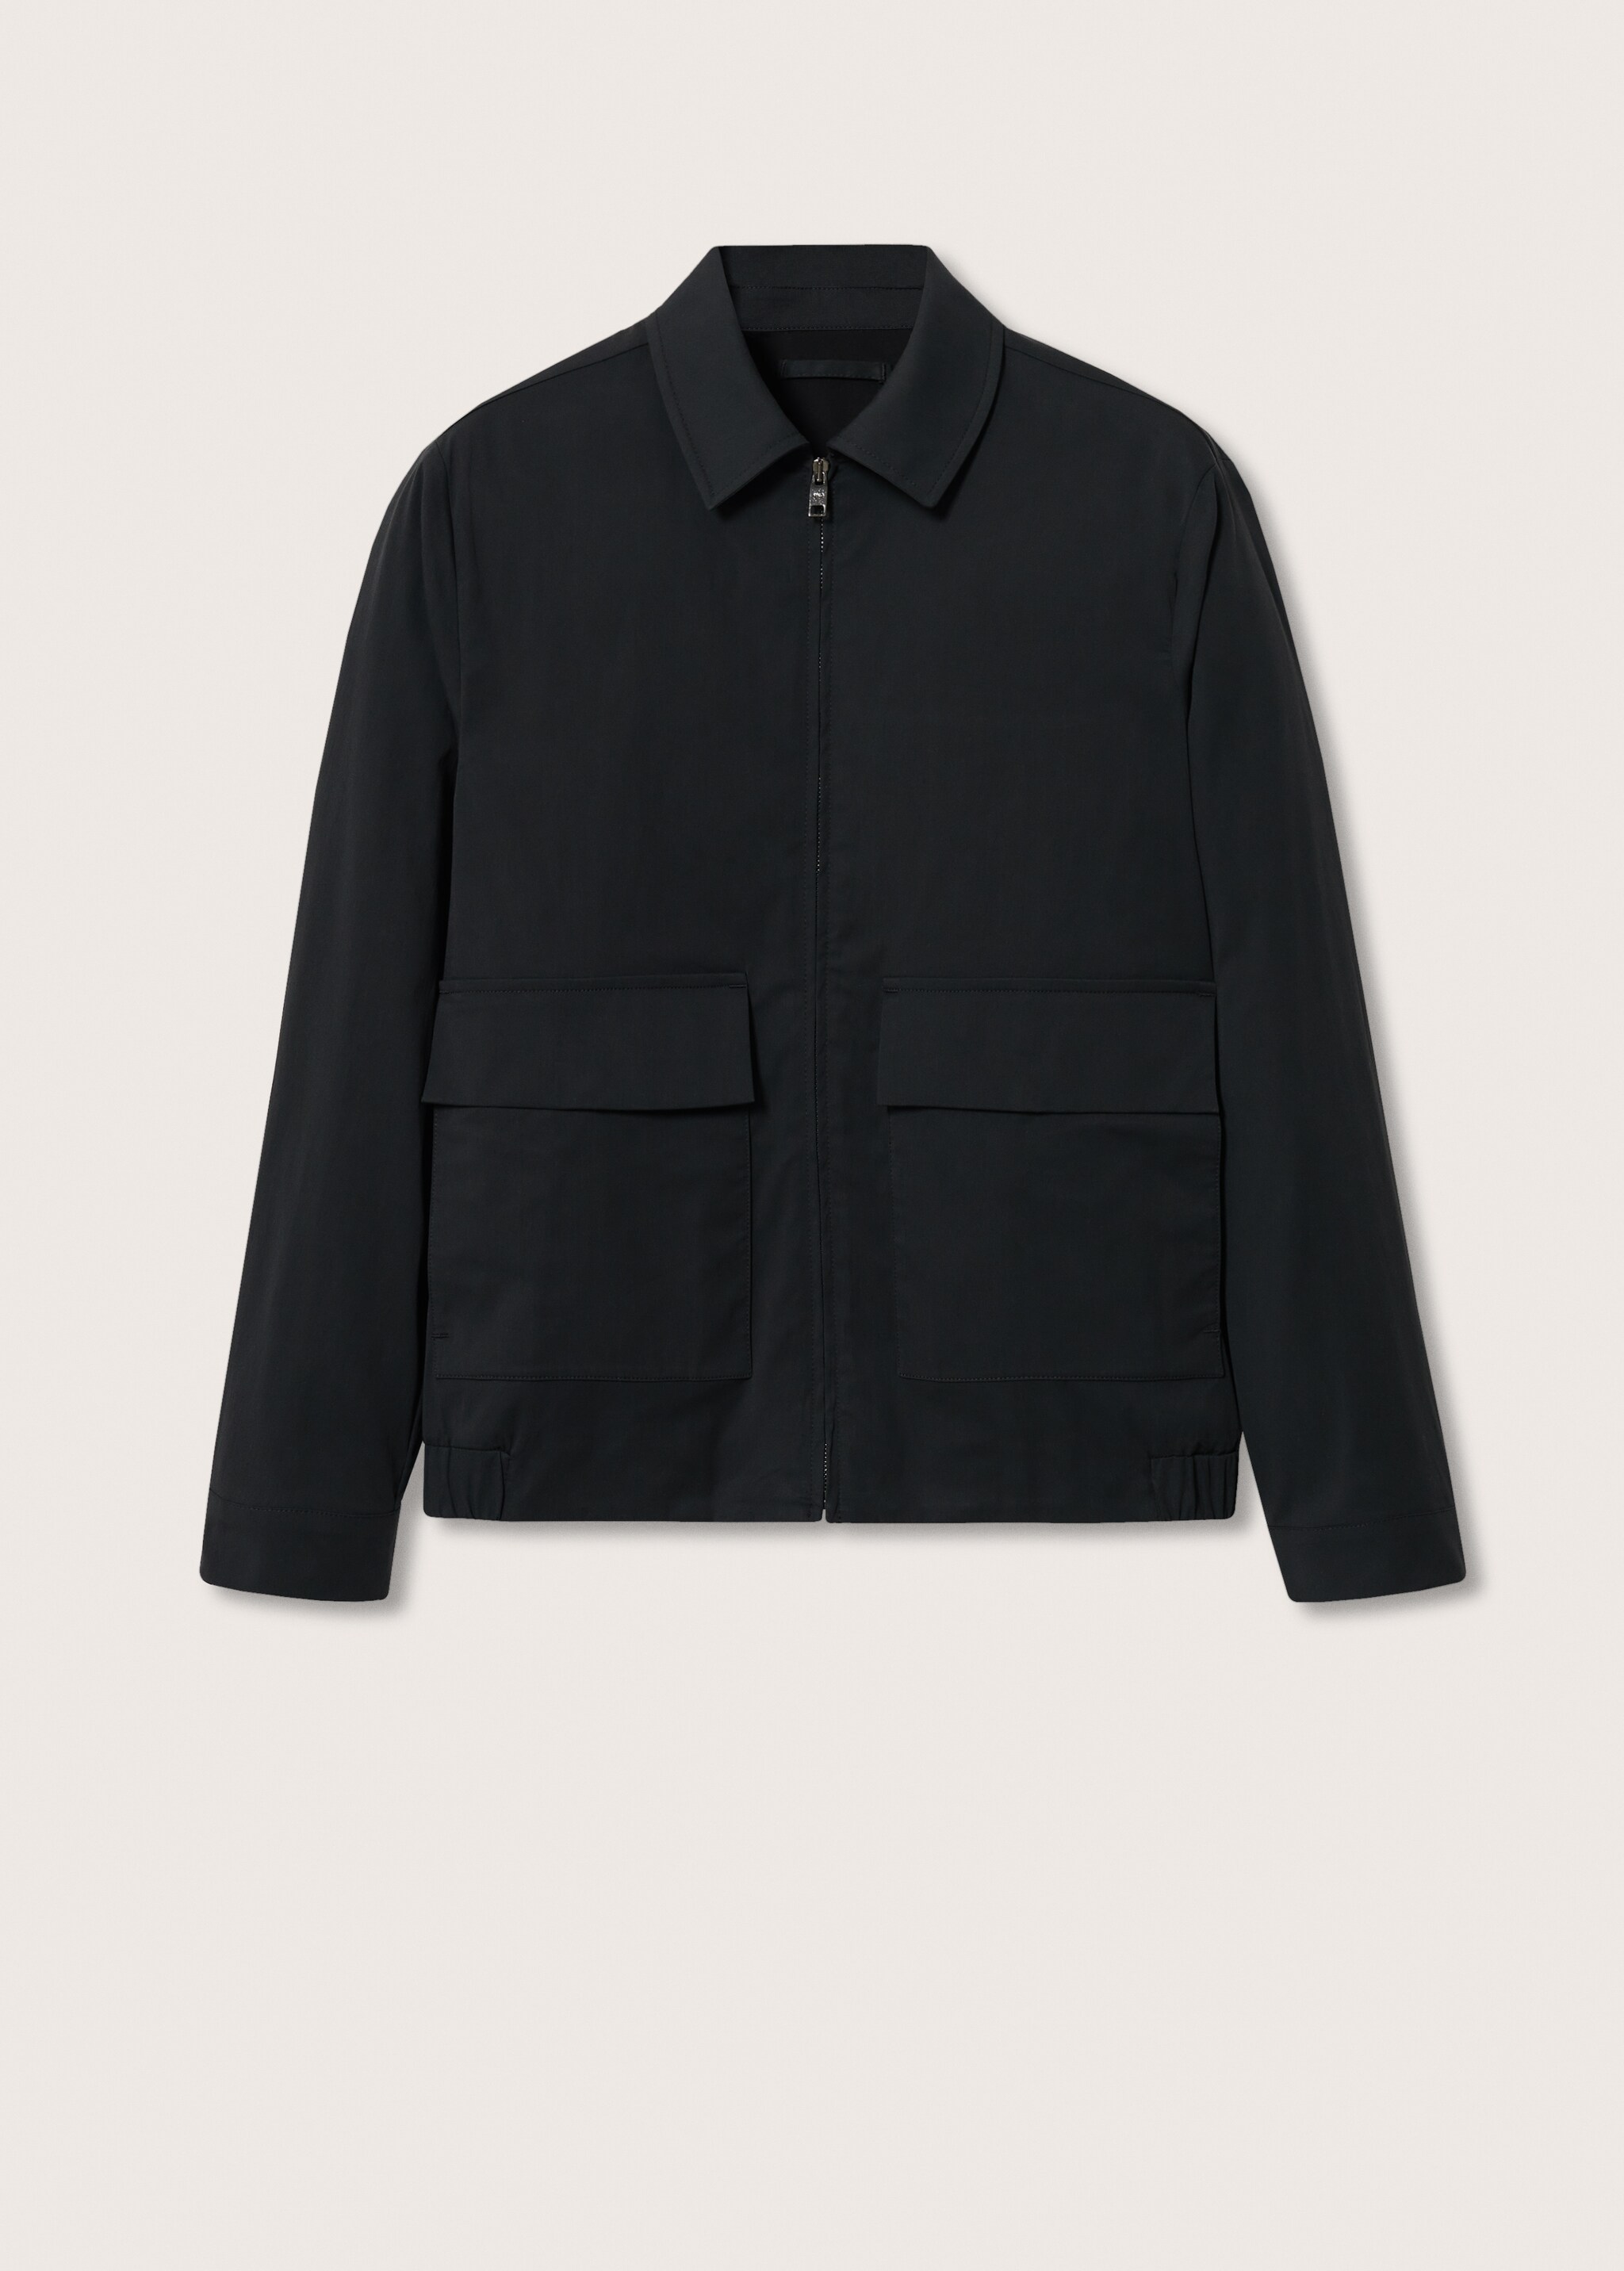 Zipper cotton jacket - Article without model